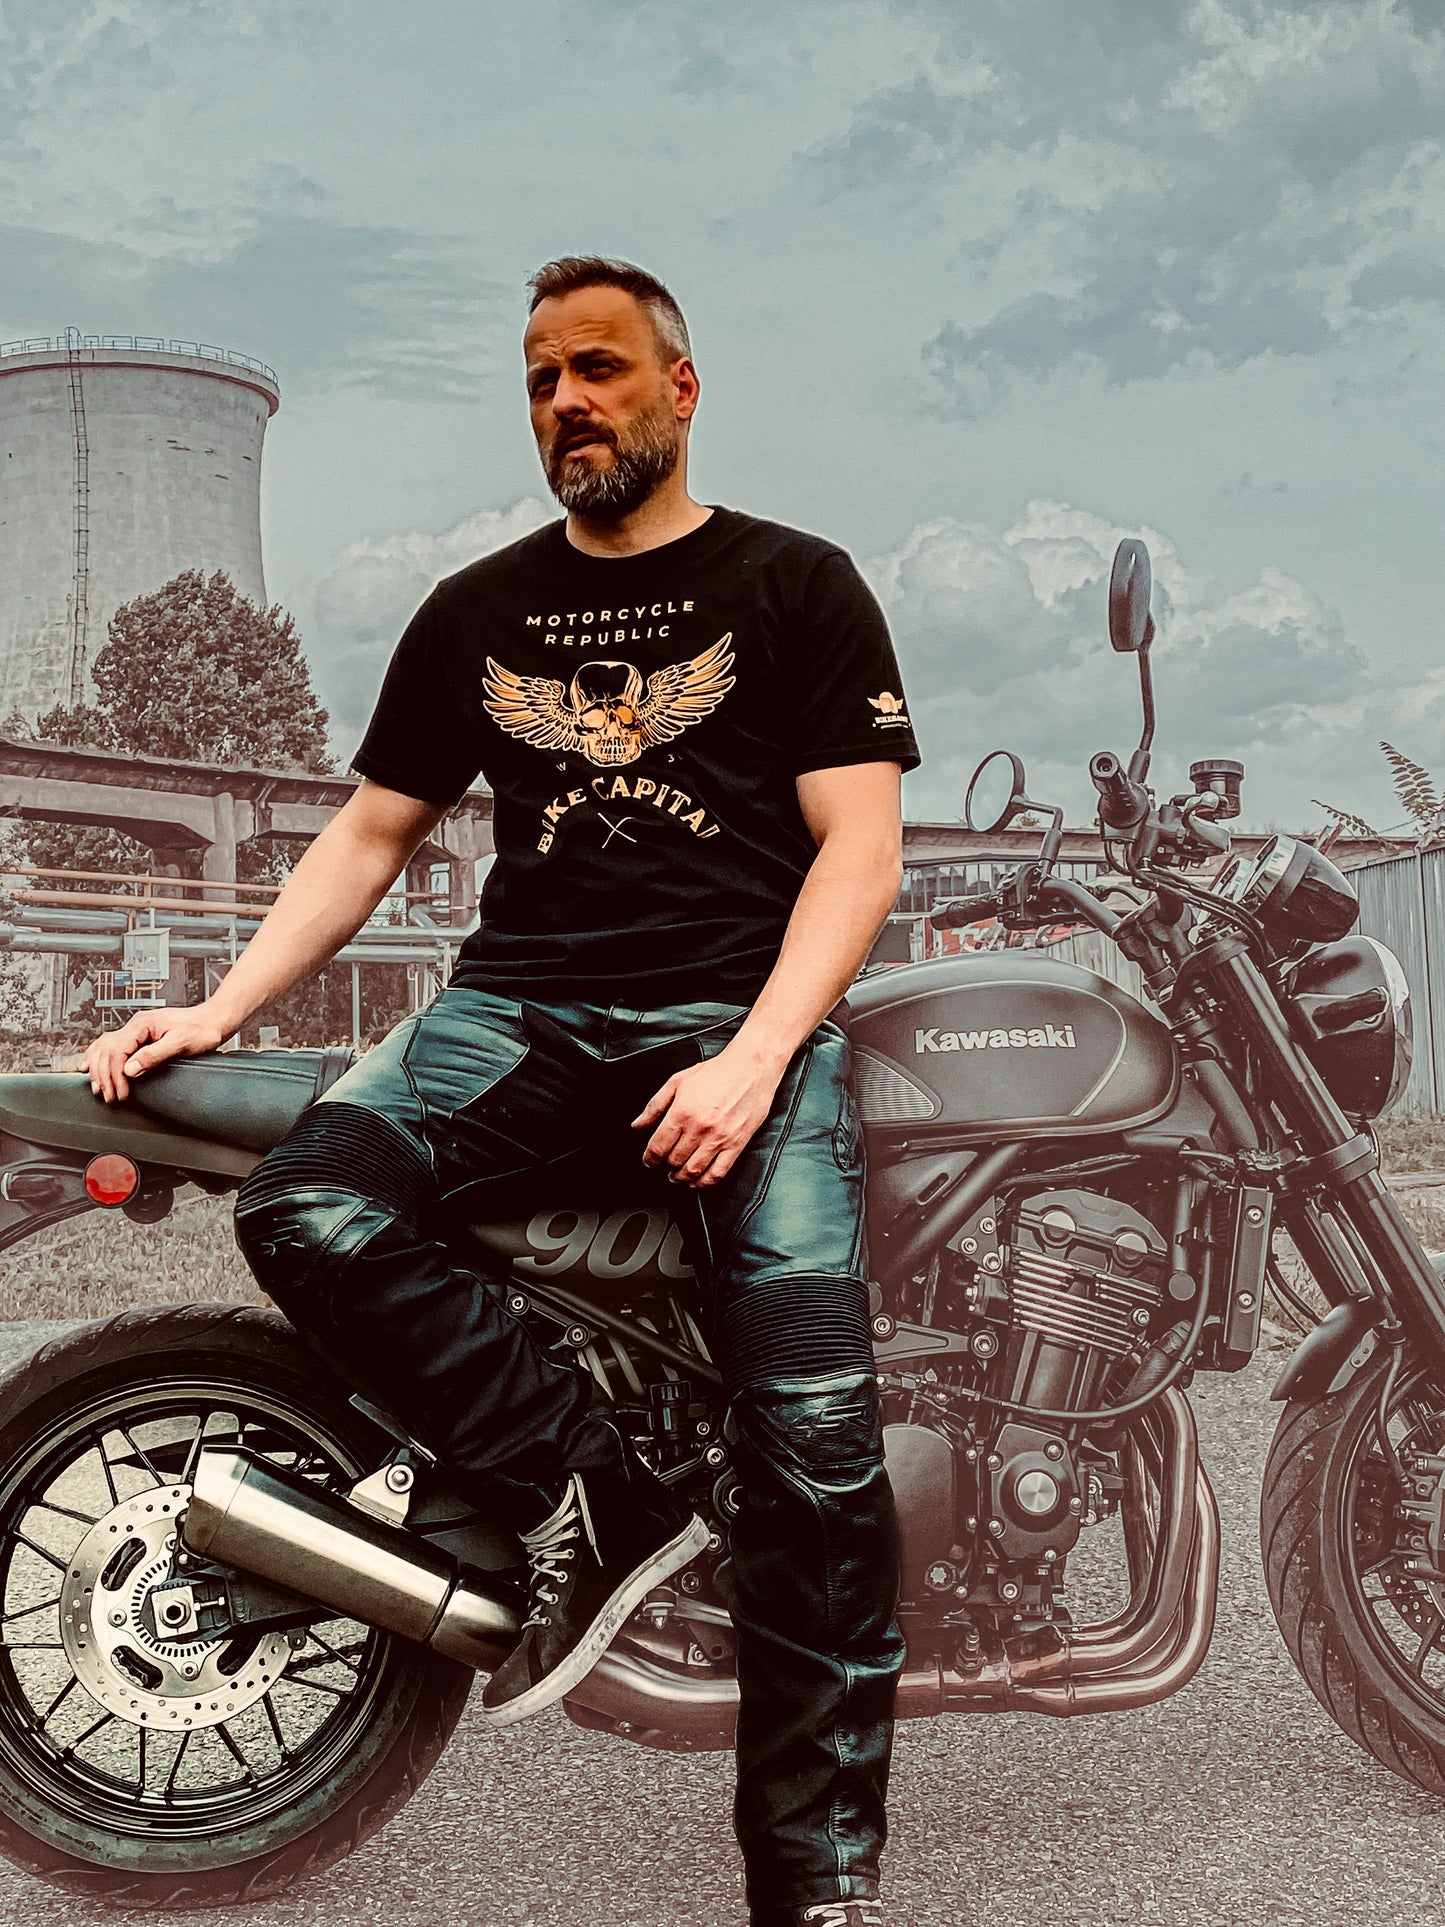 T-shirt moto manica corta nera - Bike Capital